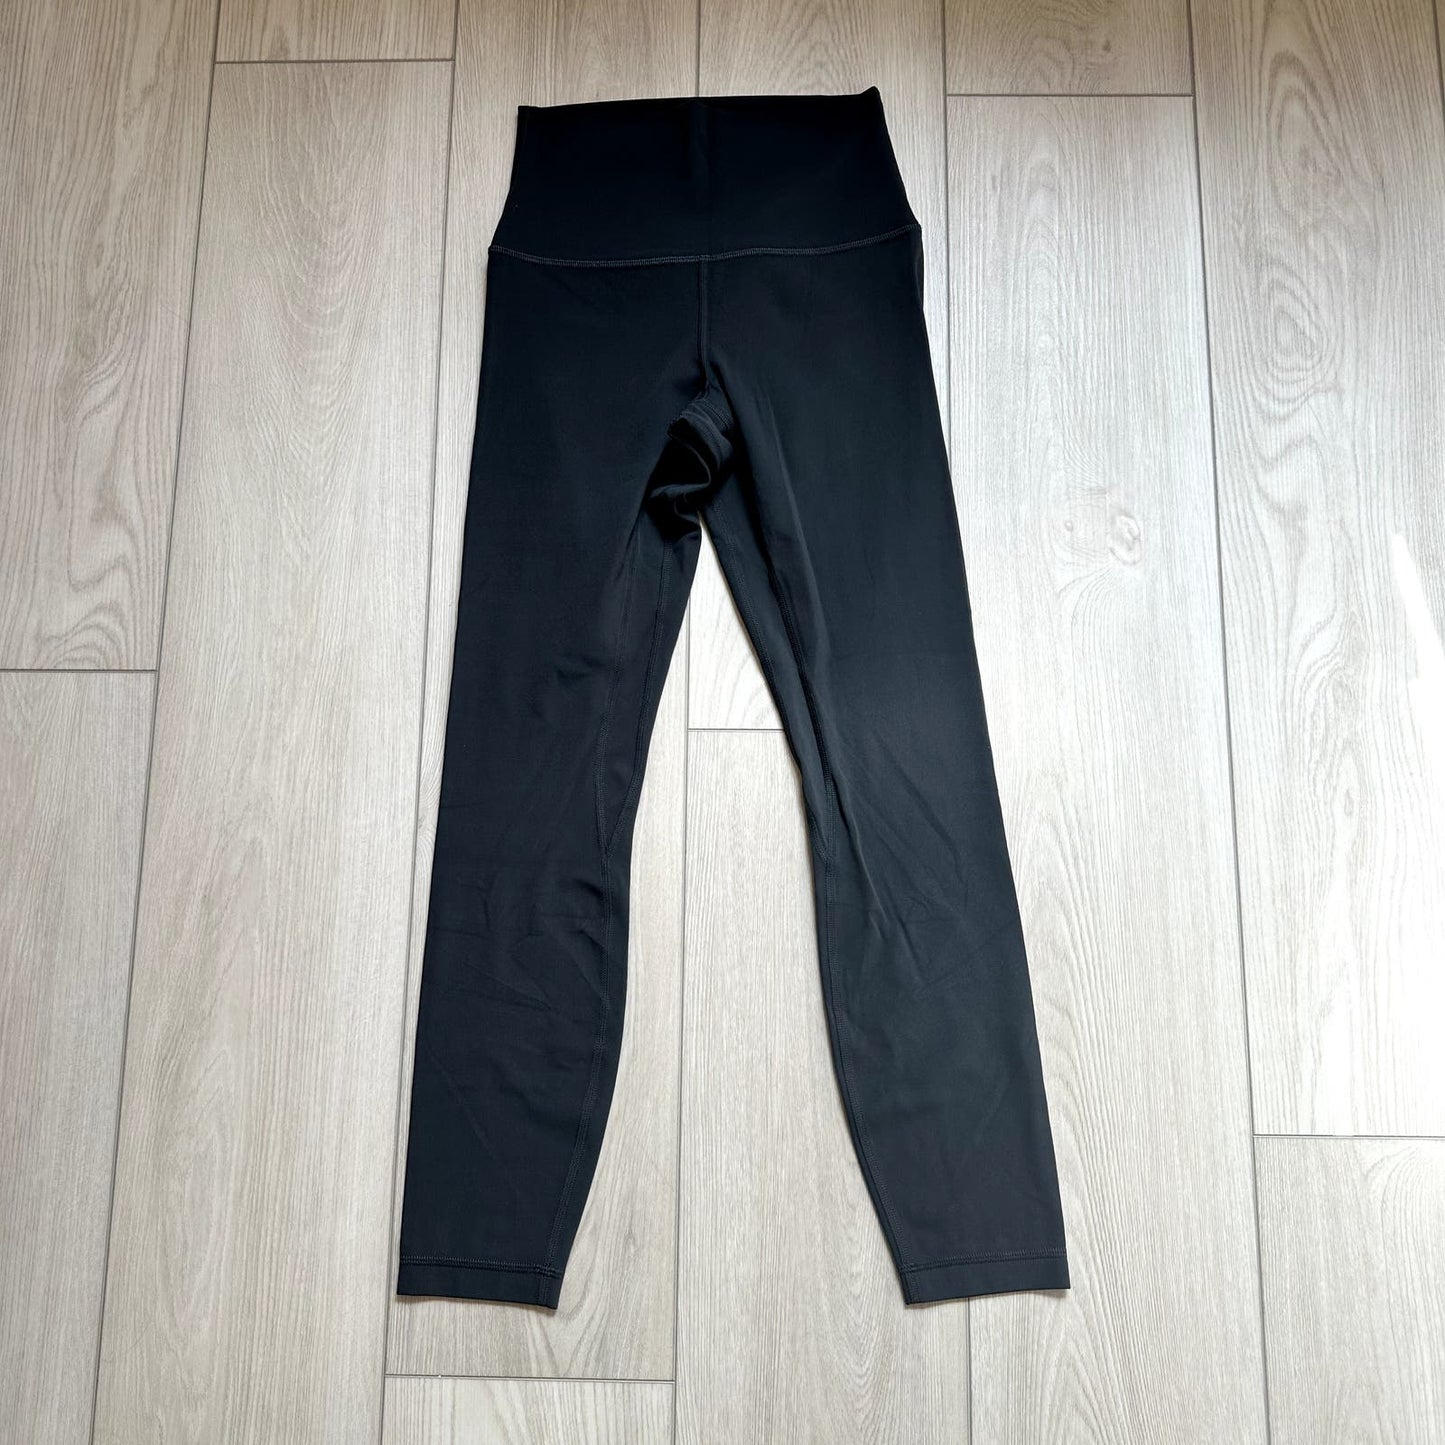 Lululemon Align Pant 25" Graphite Grey athletic leggings